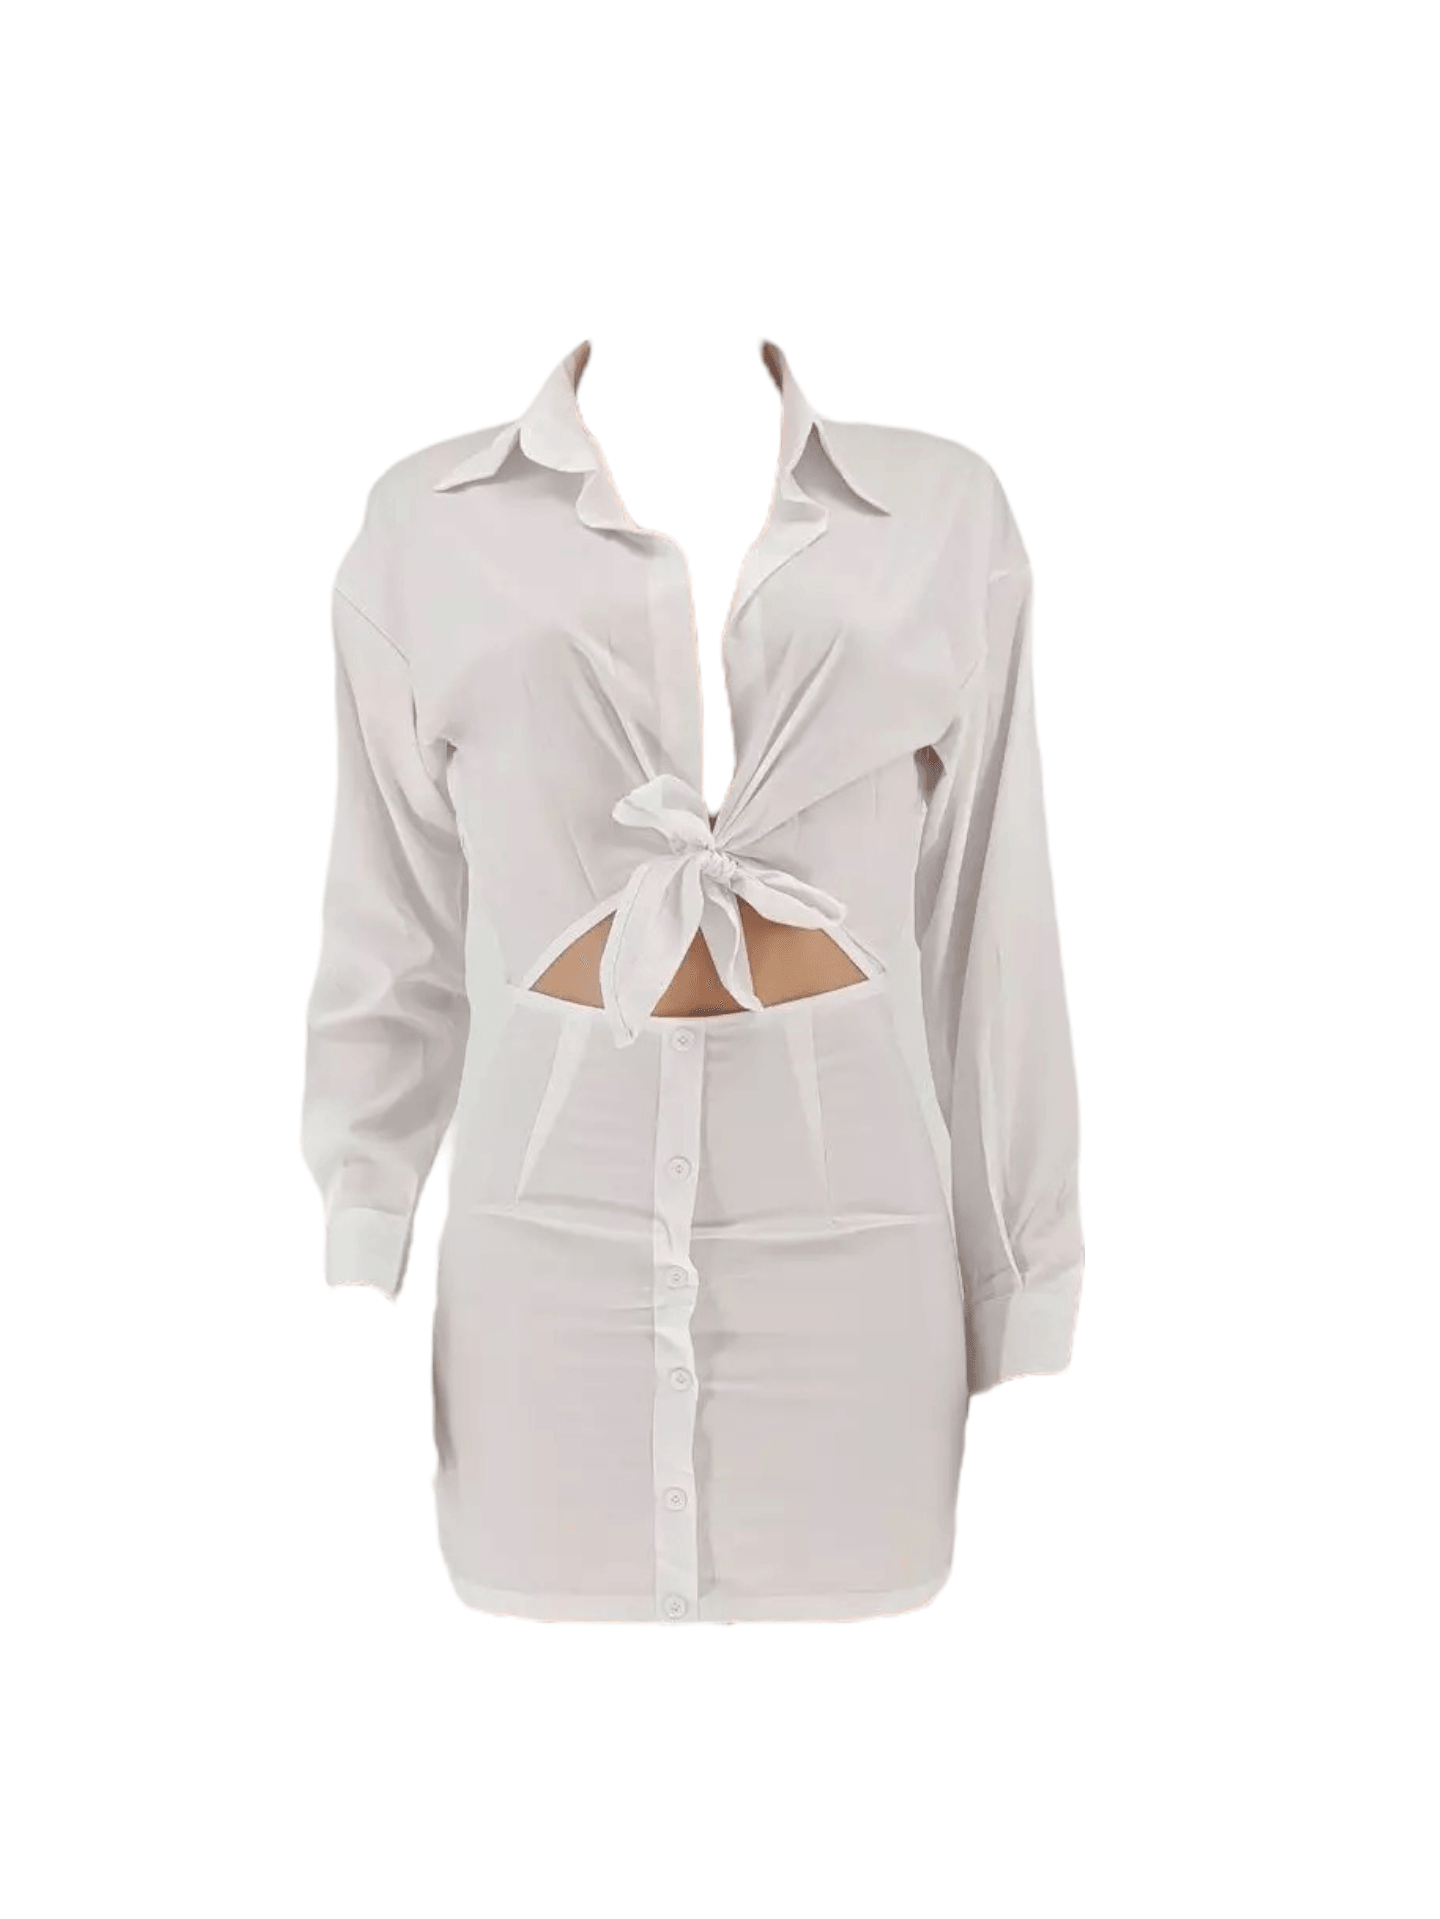 Turn-Down Collar Blouse Mini Dress White / S